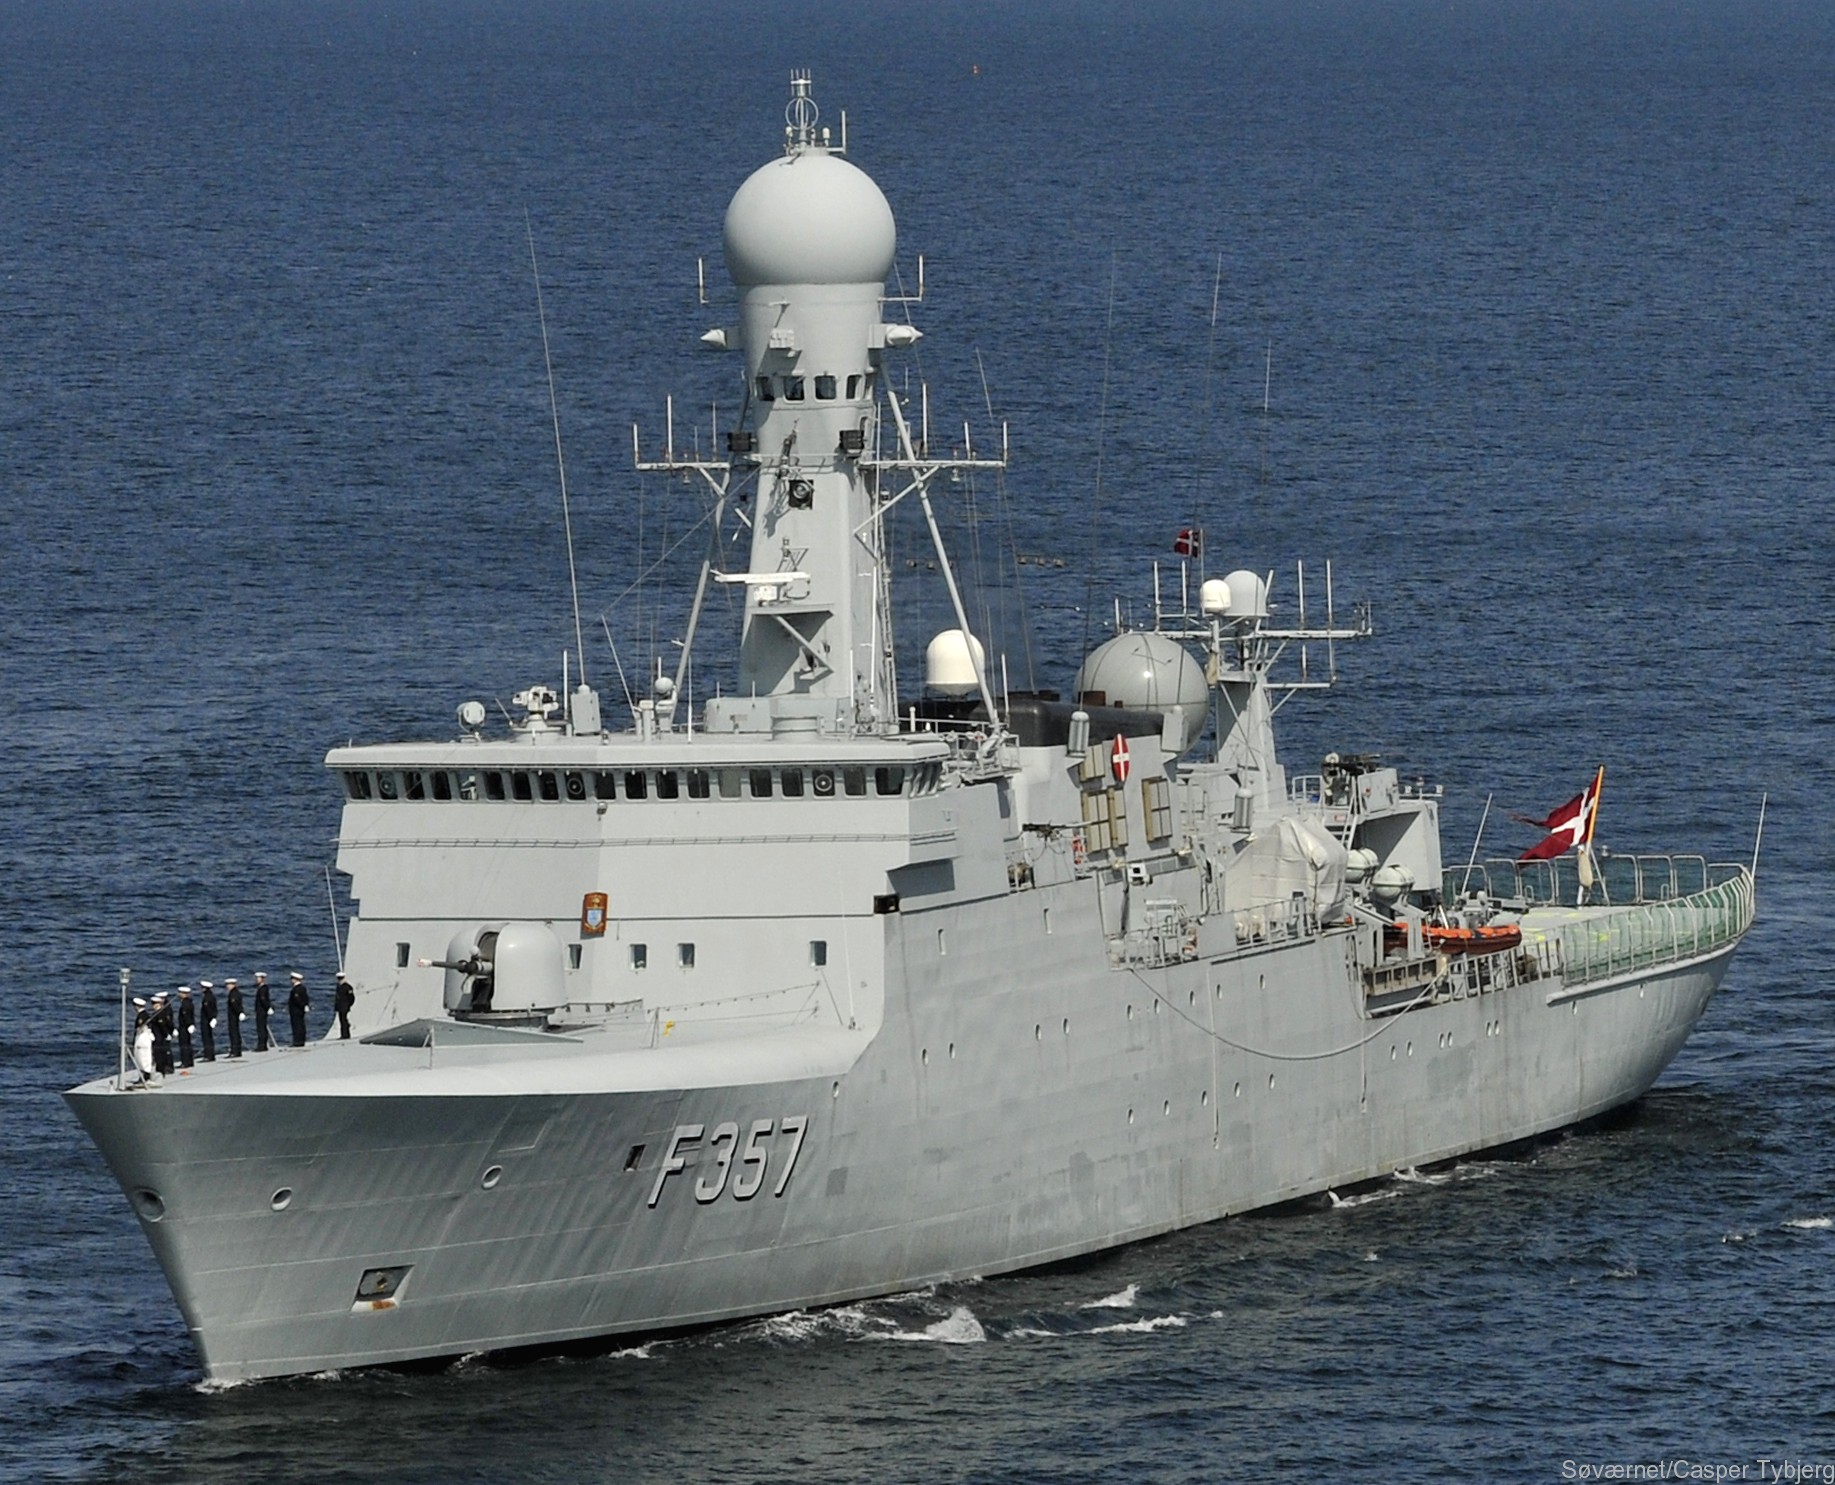 f-357 hdms thetis ocean patrol frigate royal danish navy kongelige danske marine inspektionsskibet 43